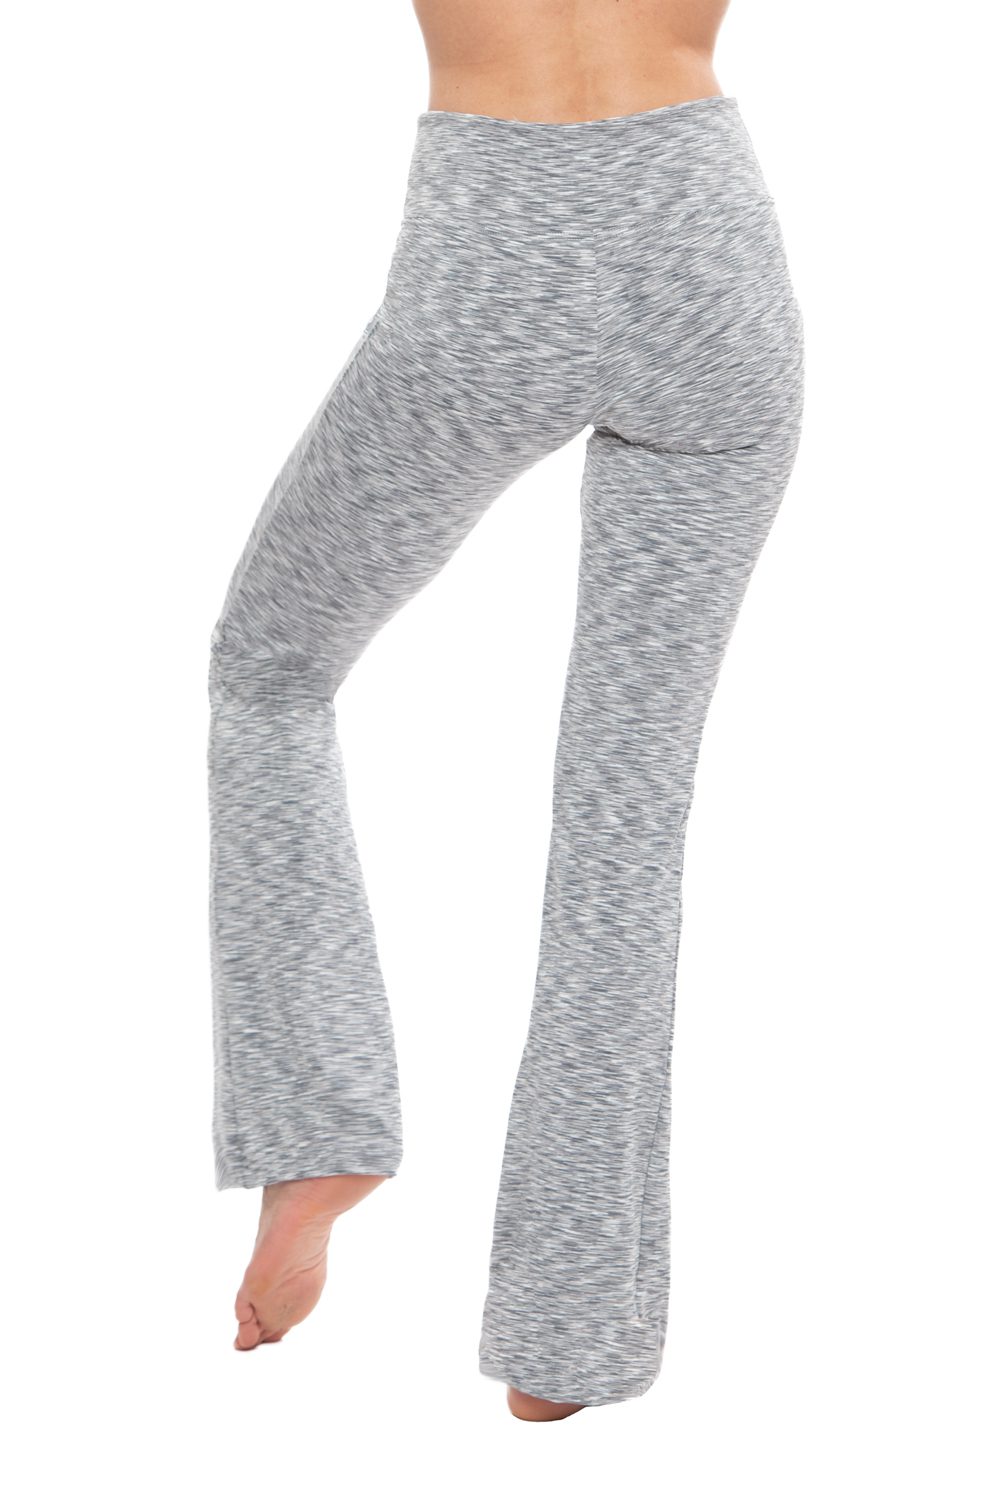  Nirlon Women's Bootcut Yoga Pants - Flare Leggings